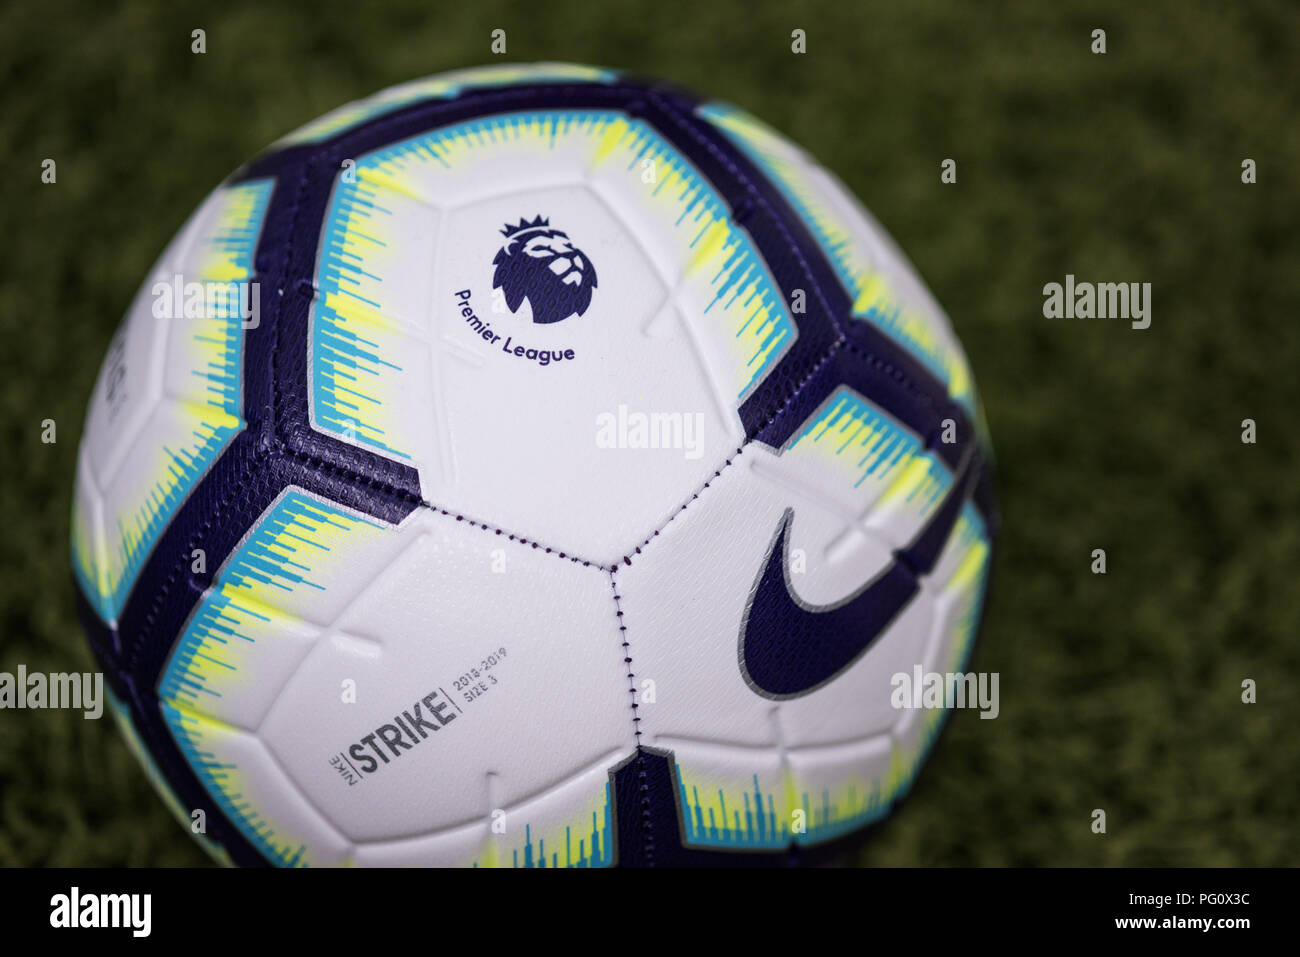 Merlin Nike pelota para la temporada 2018/19 de la Premier League. Foto de stock